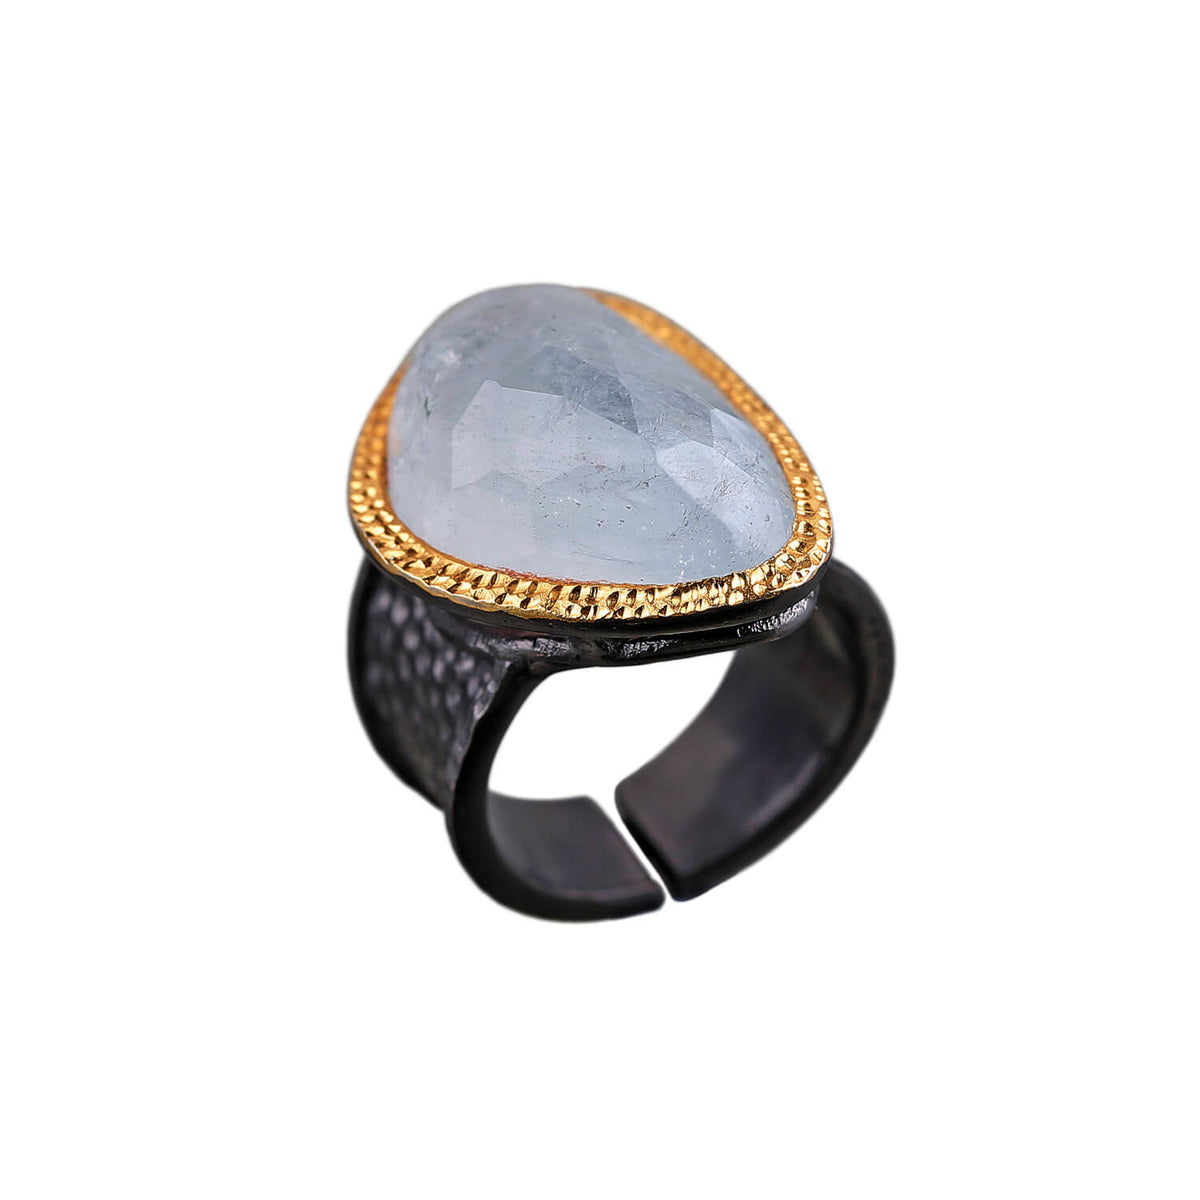 Aquamarine Ring with Big Black Silver Band